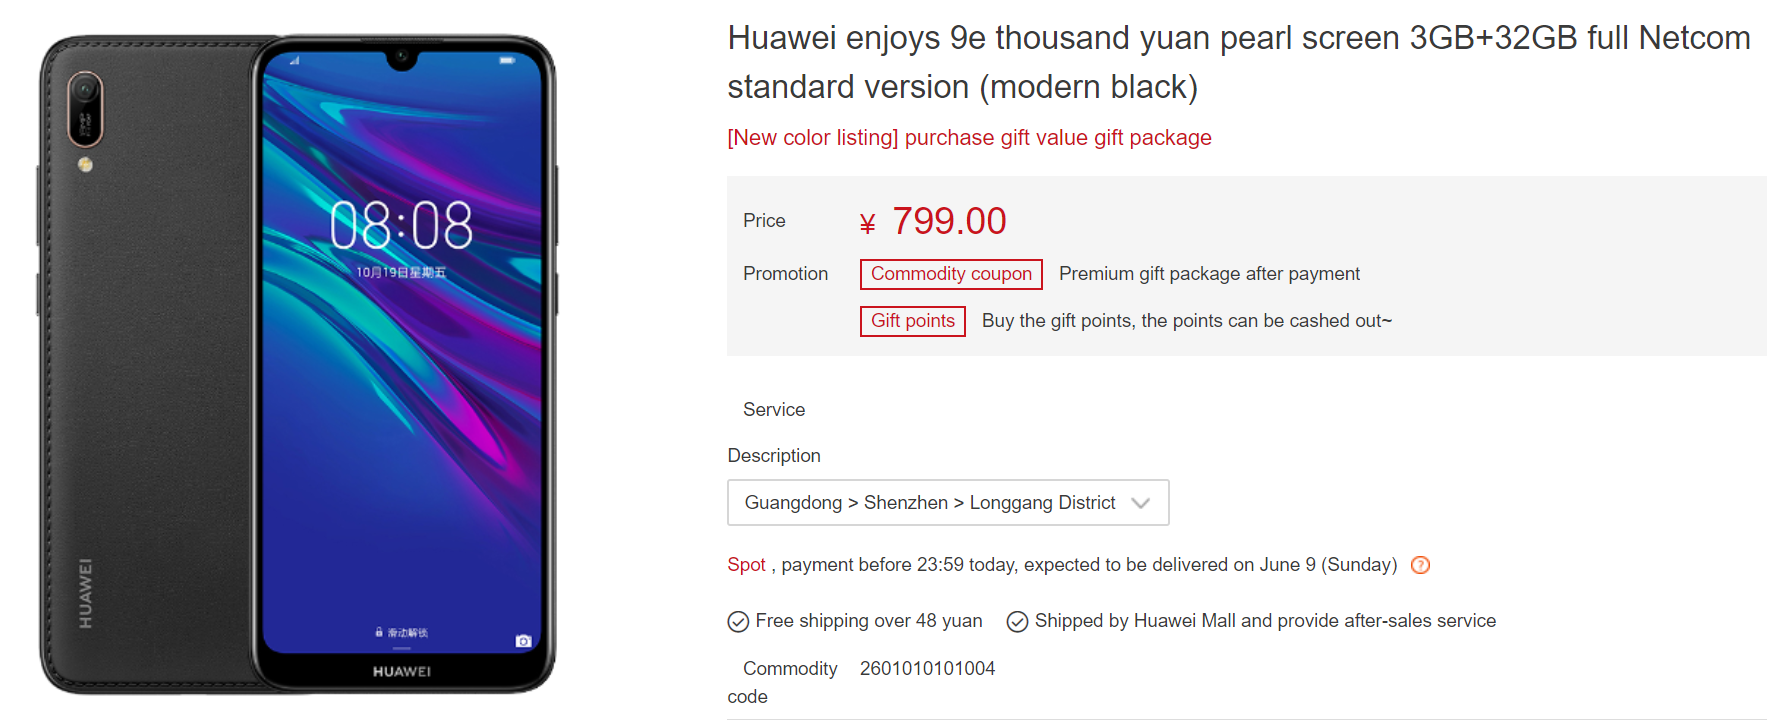 Huawei Enjoy 9e 3GB+32GB